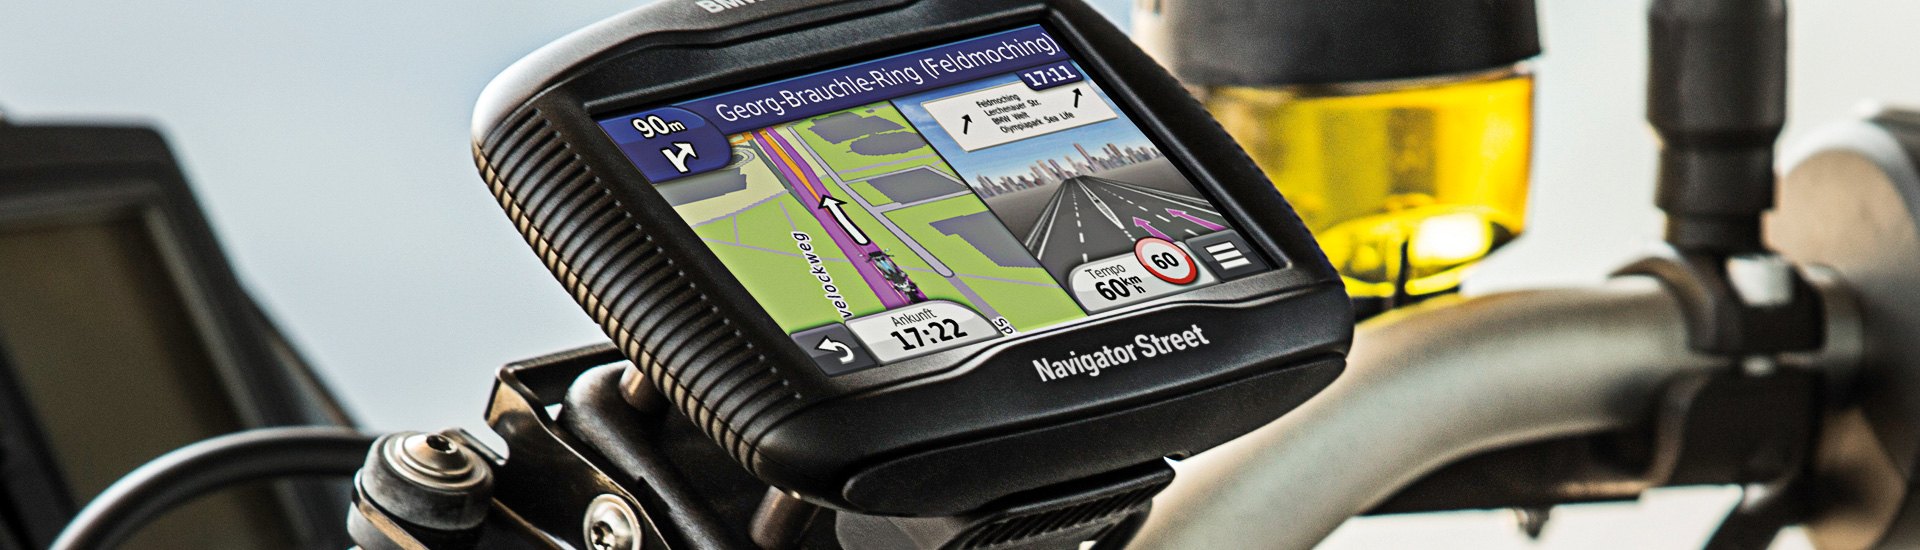 Universal Motorcycle GPS & Navigation